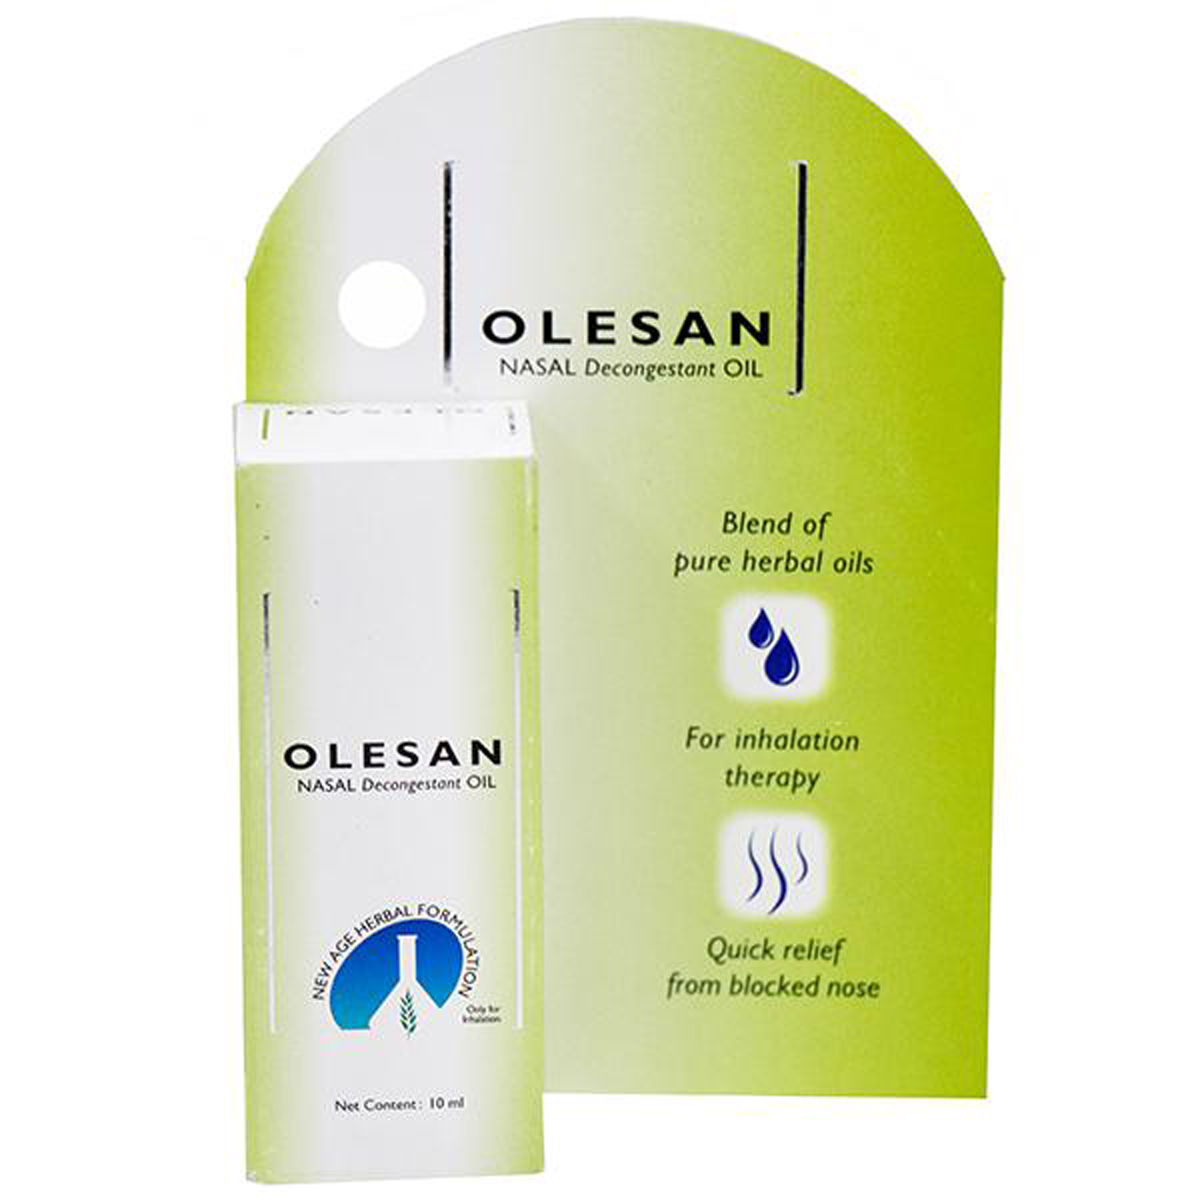 Buy Olesan Nasal Decongestant Oil, 10 ml Online